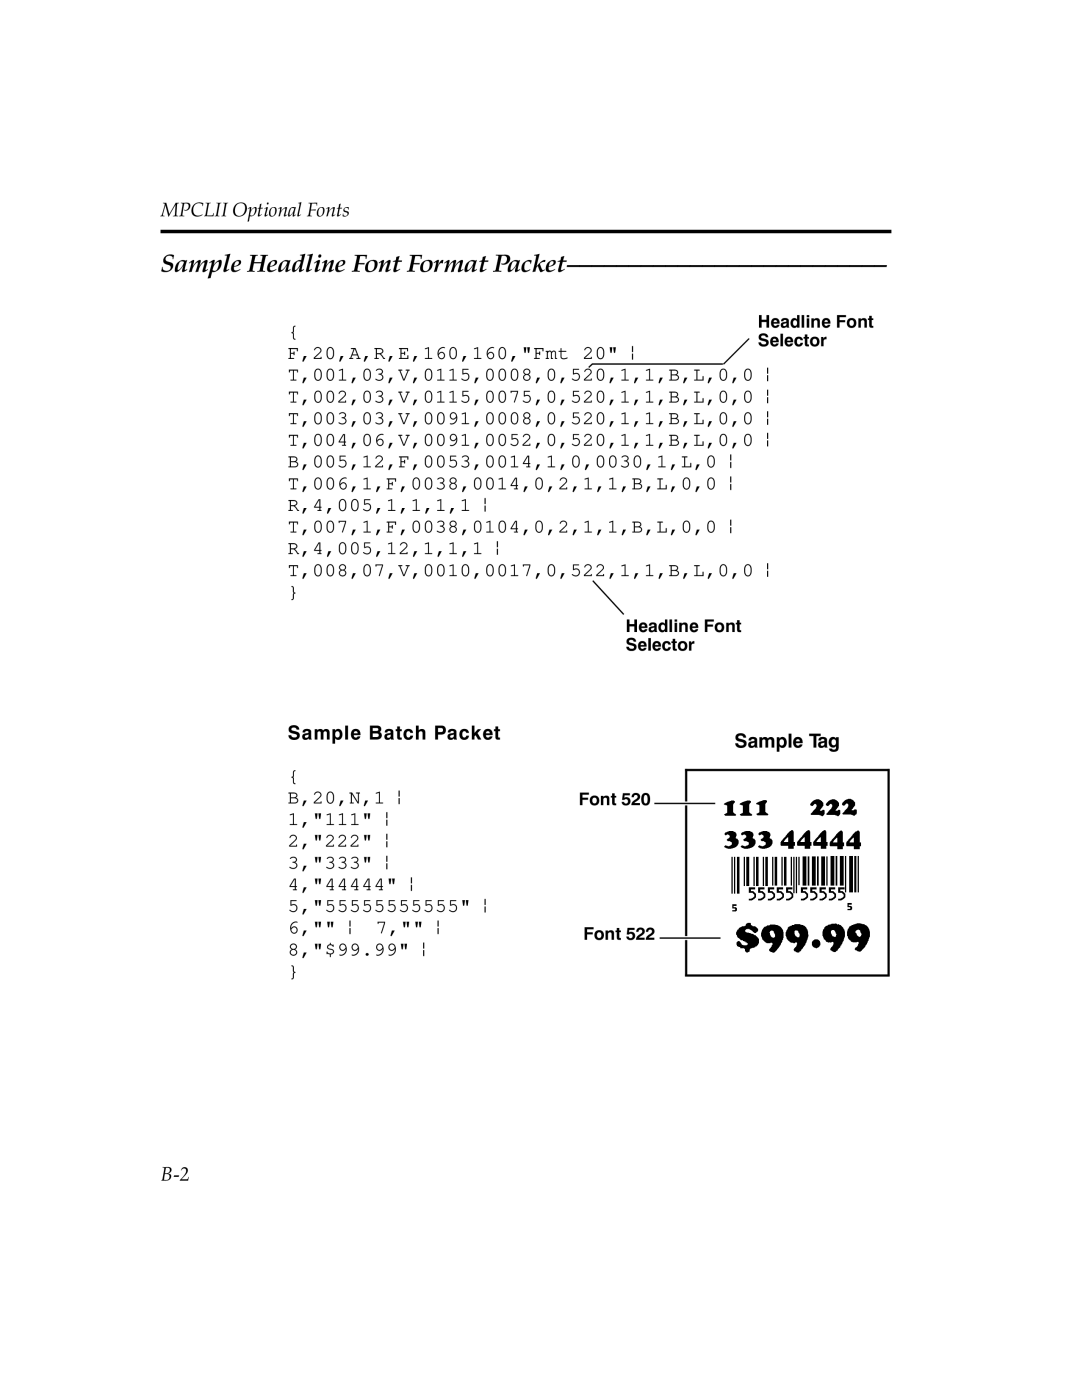 Paxar MPCL II manual Sample Headline Font Format Packet, MPCLII Optional Fonts, Sample Batch Packet, Sample Tag 